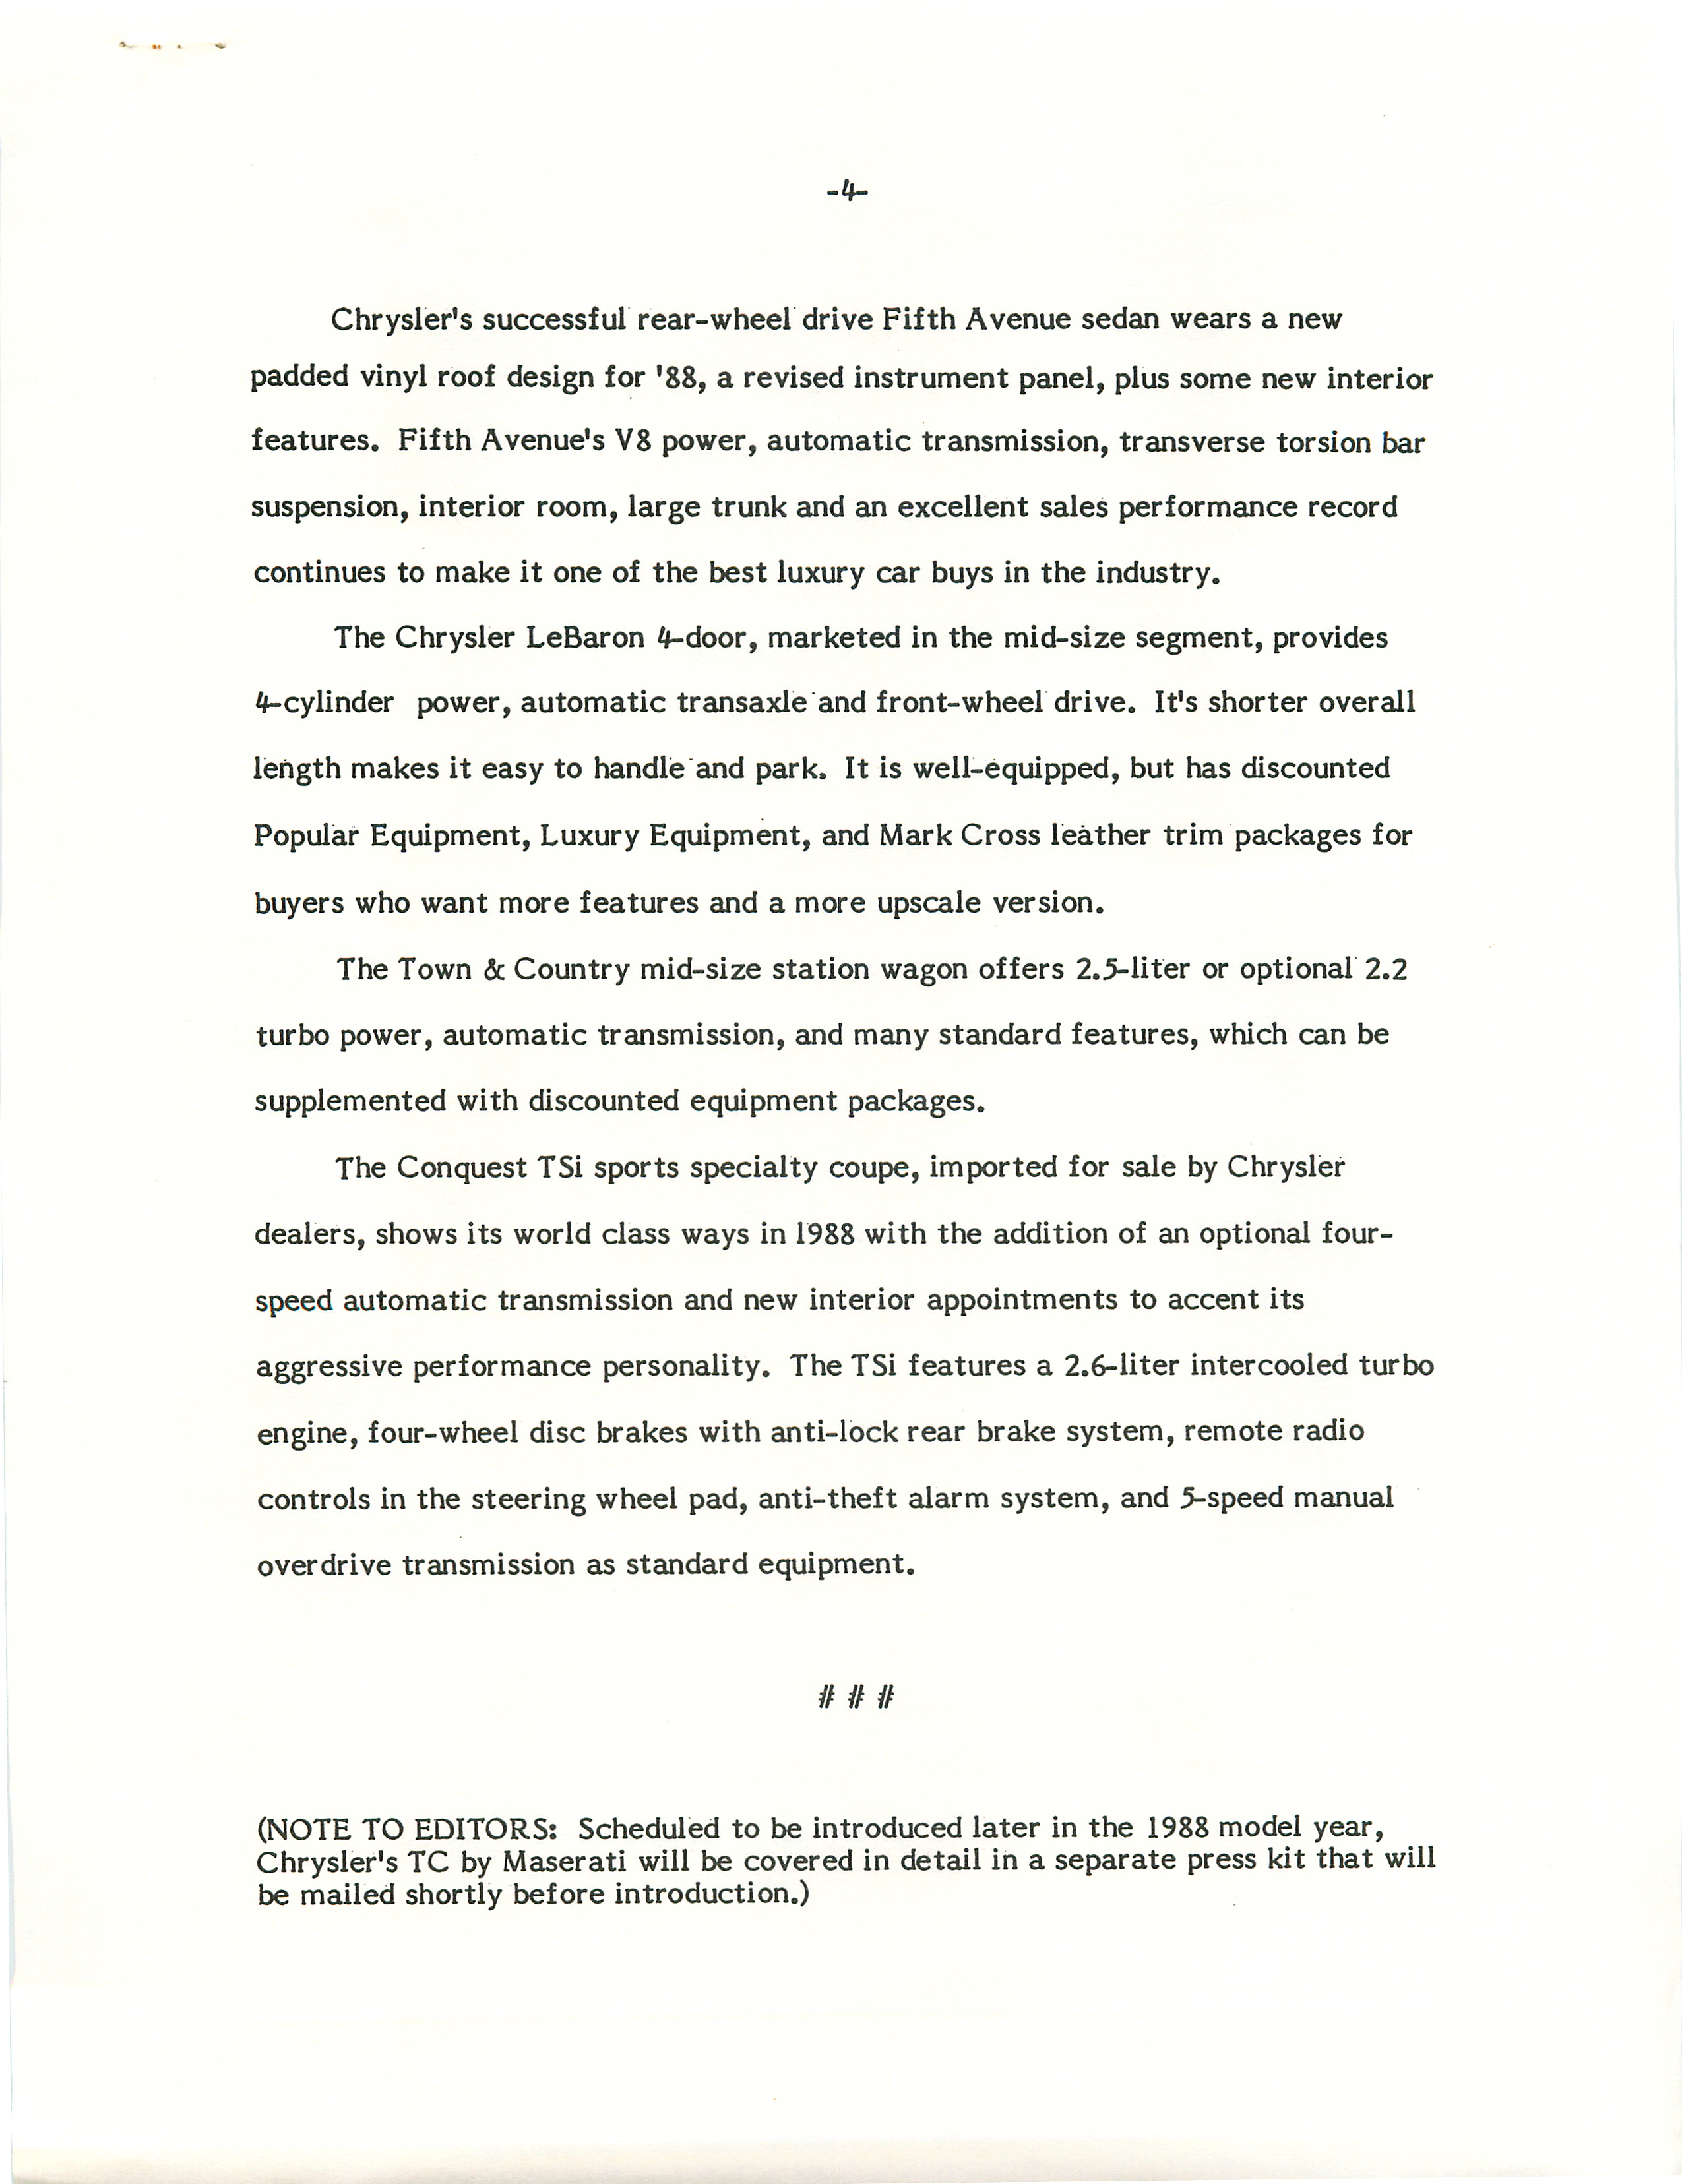 1988 Chrysler Intro Press Release-09